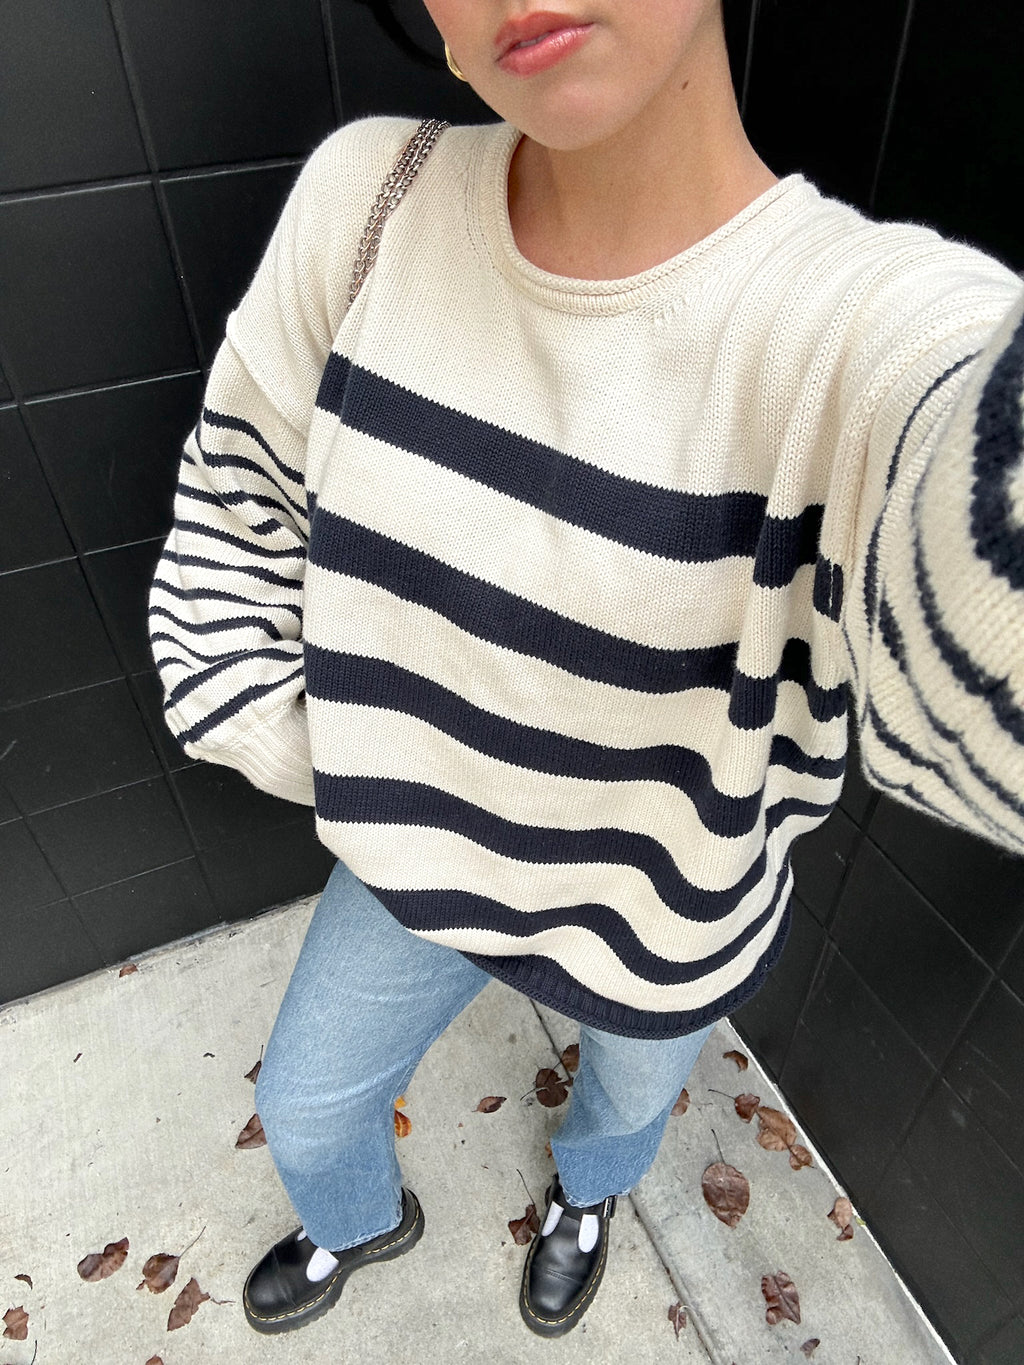 My Way Striped Sweater